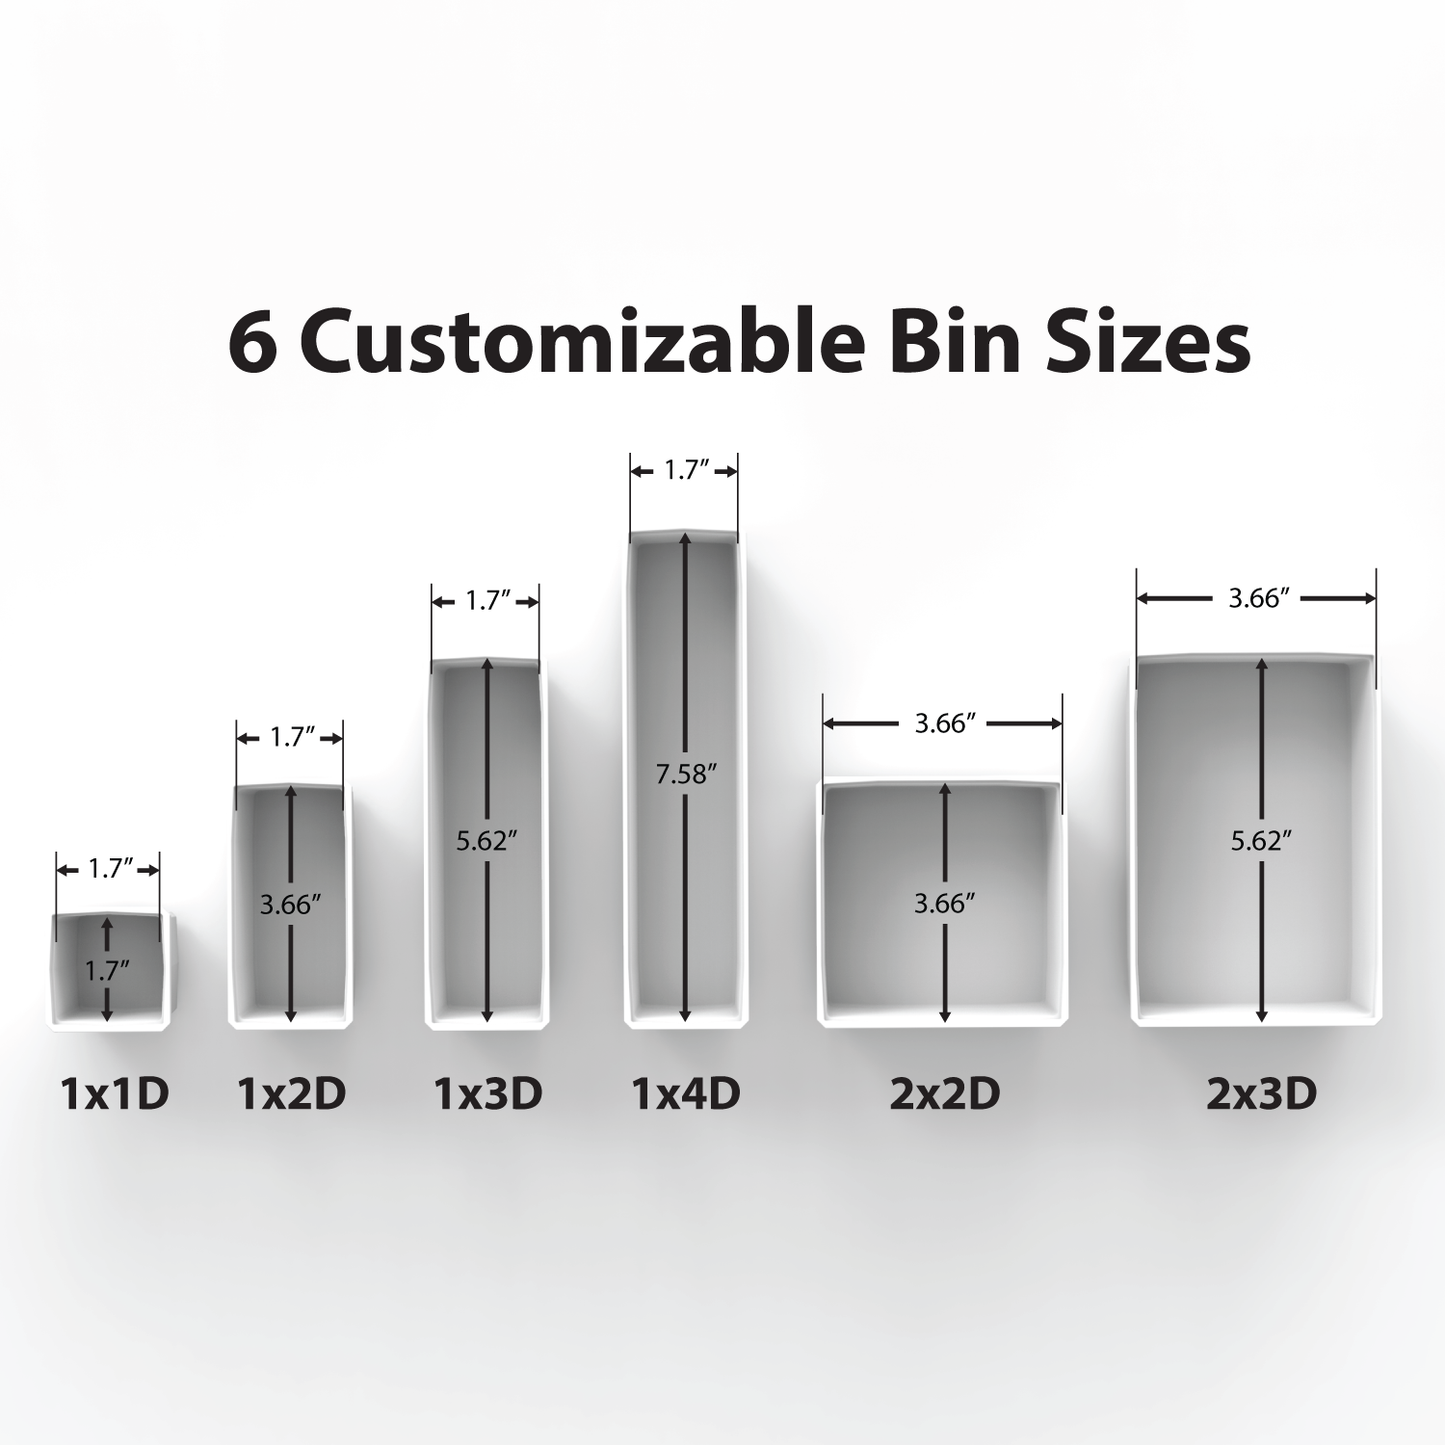 3 Customizable 1x2D (Deep) Bins (1.7" x 3.66")